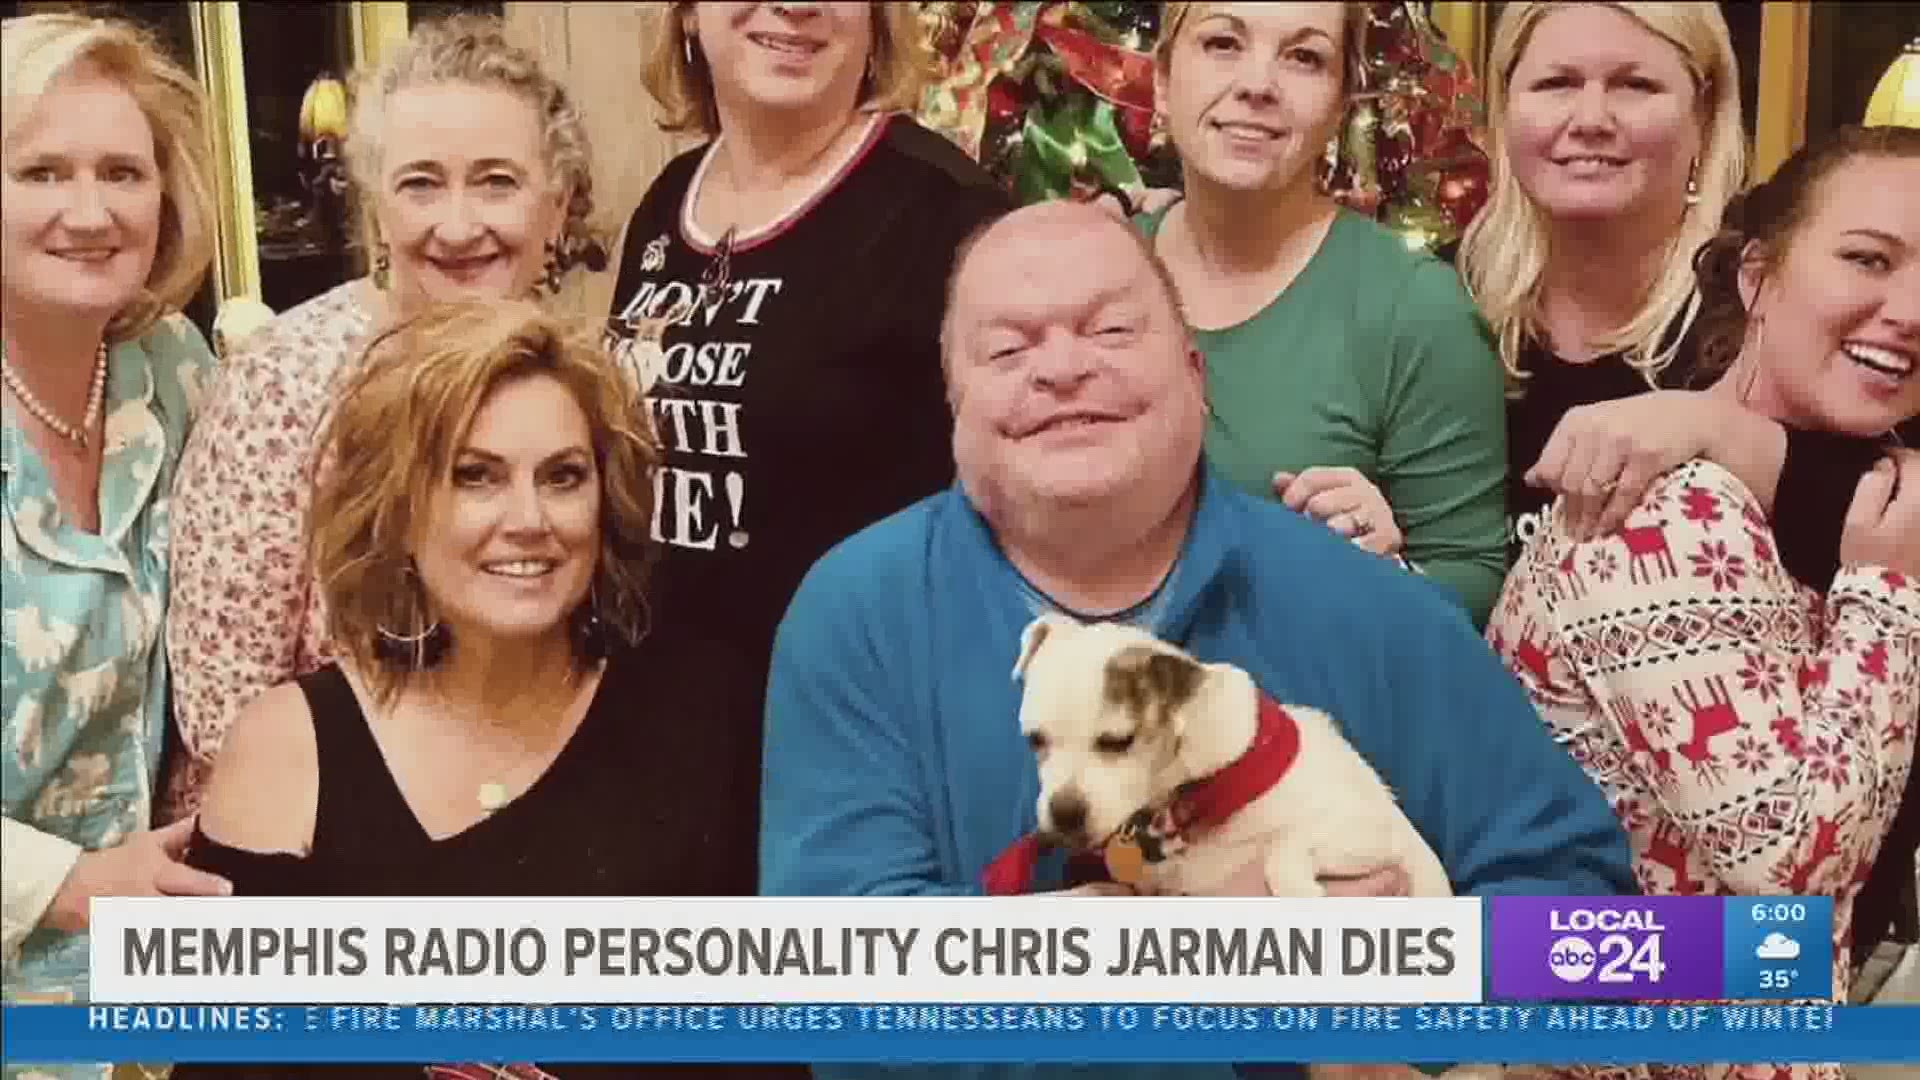 98.1 FM morning show host Chris Jarman died in a Batesville, Arkansas, hospital this week.